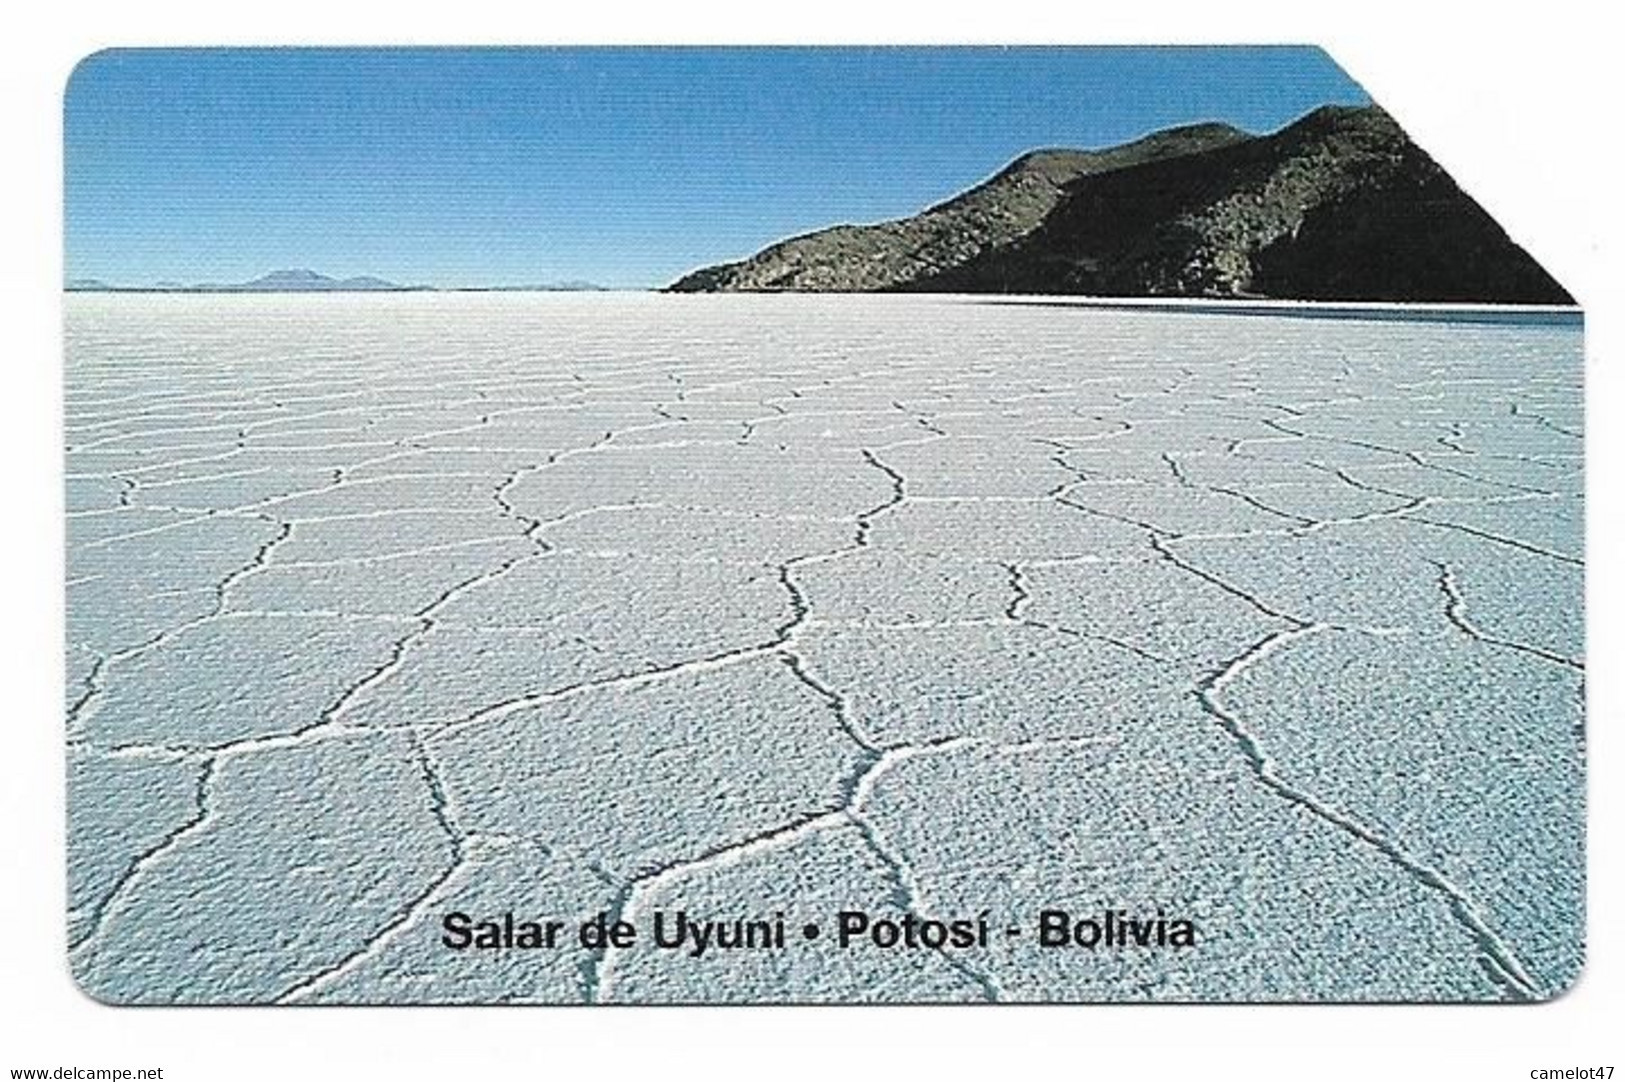 Bolivia, Entel, Urmet Used Phone Card, No Value, Collectors Item, # Bolivia-41 - Bolivie